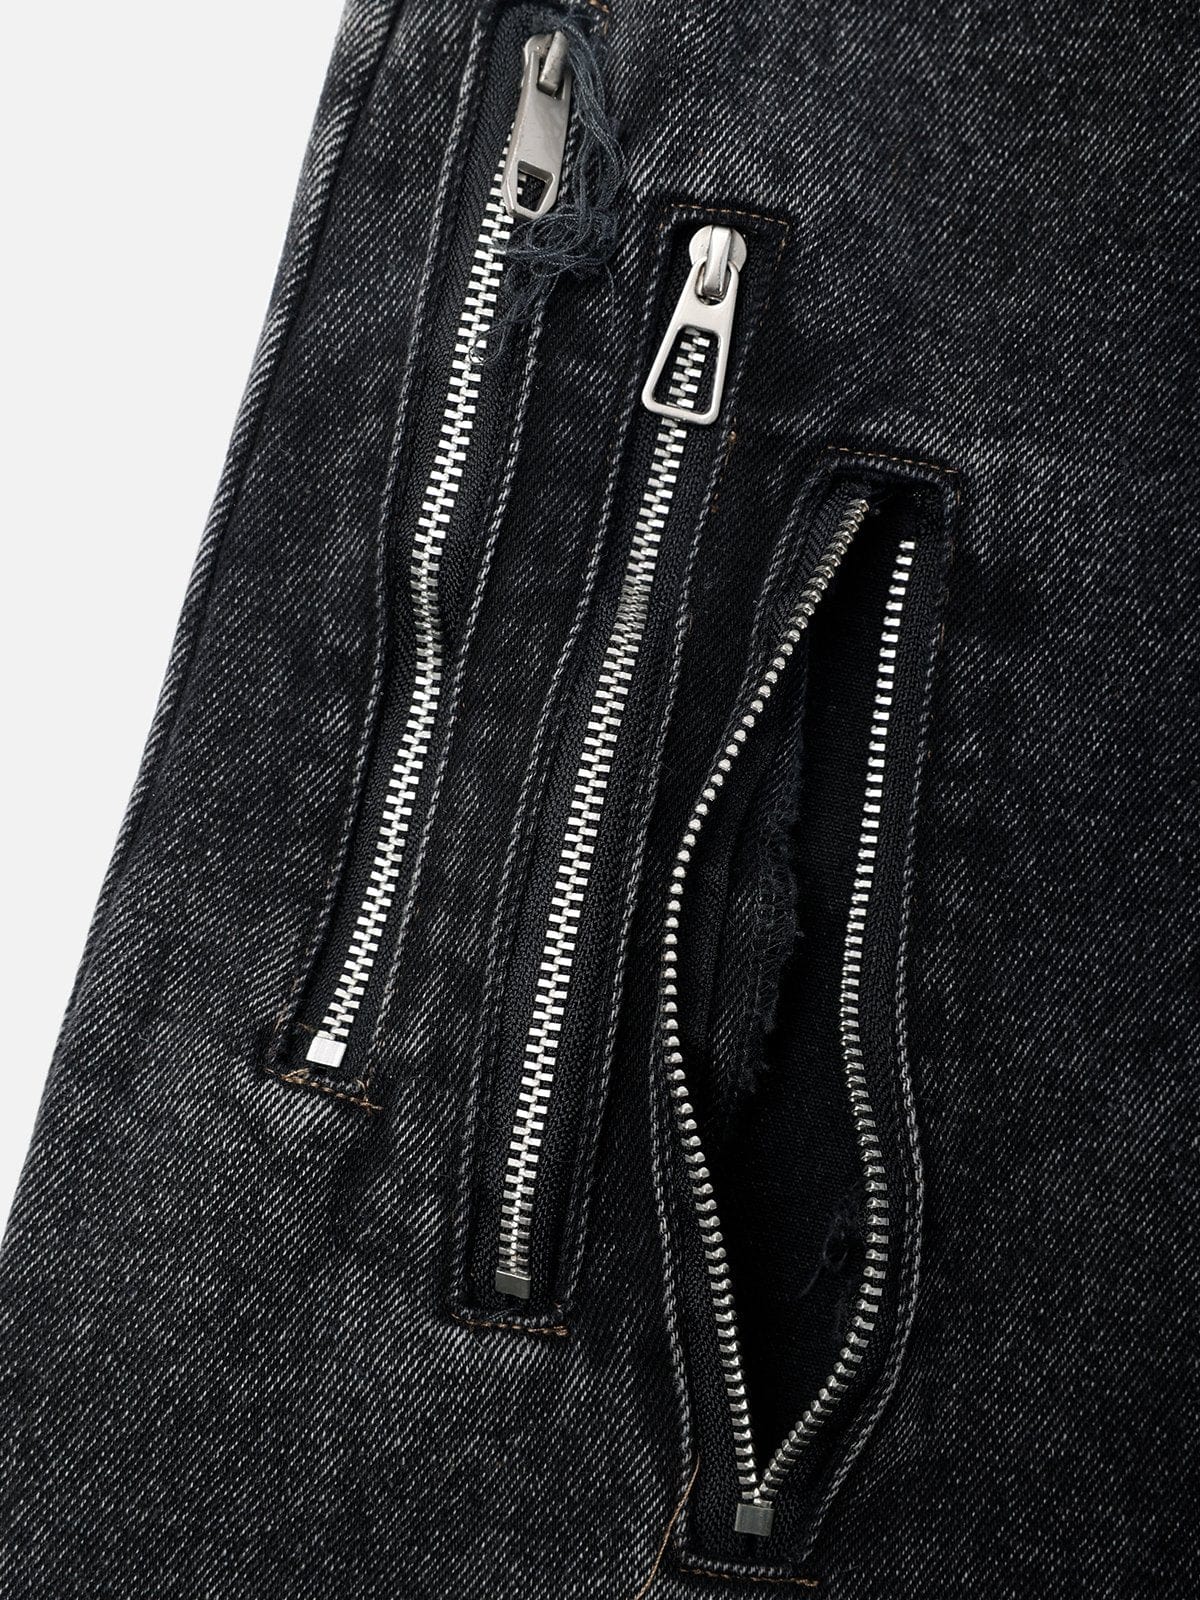 NEV Multi-strap Wrap Jeans